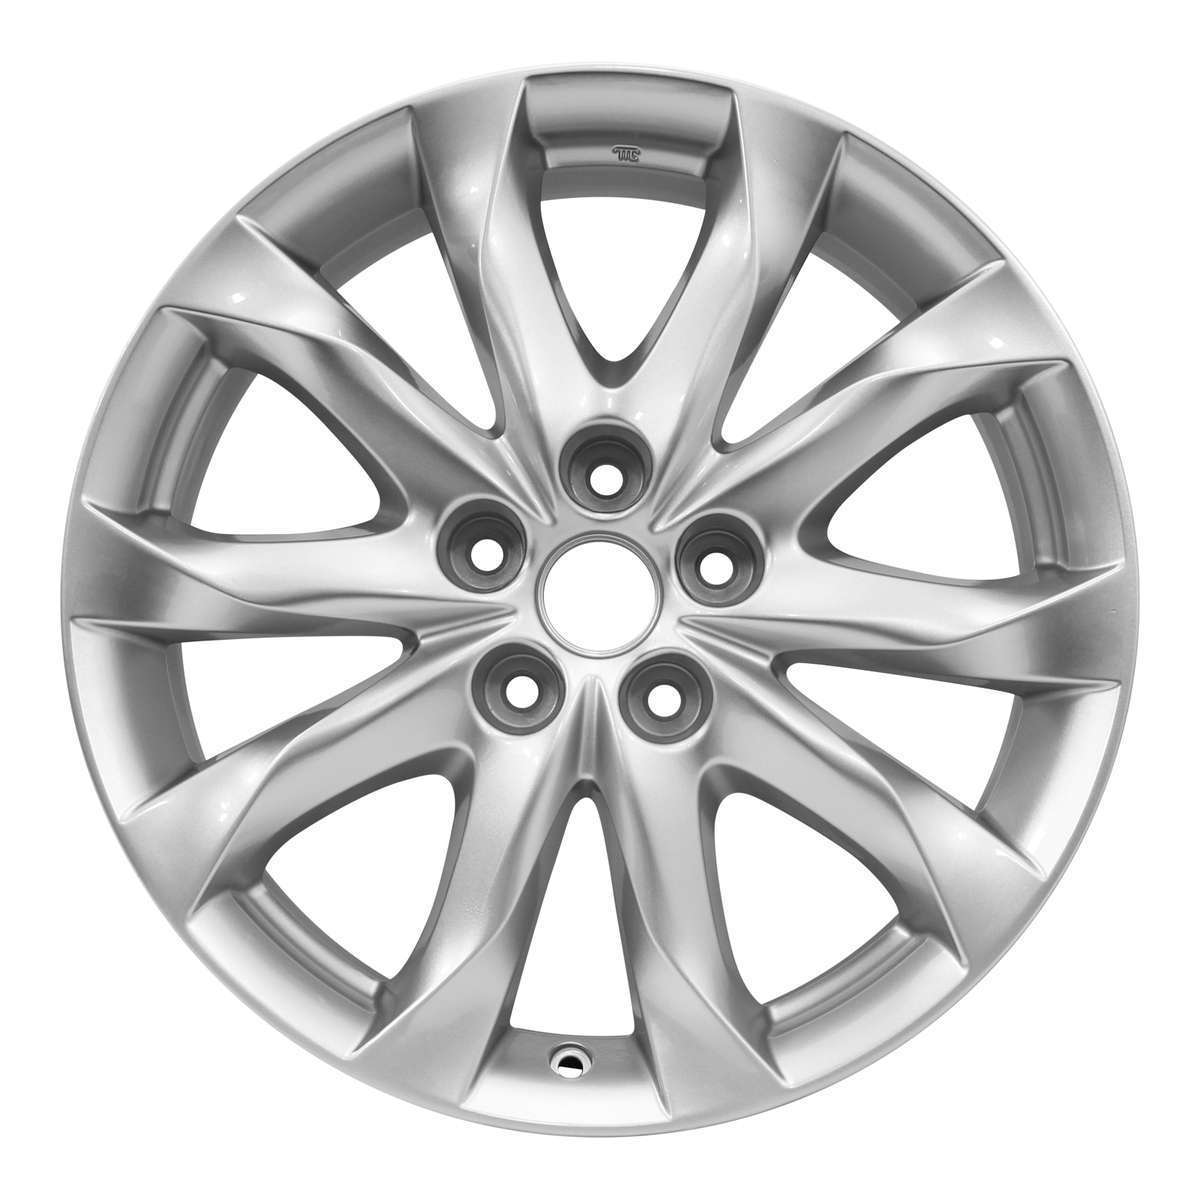 2017 Mazda 3 New 18" Replacement Wheel Rim RW64962S